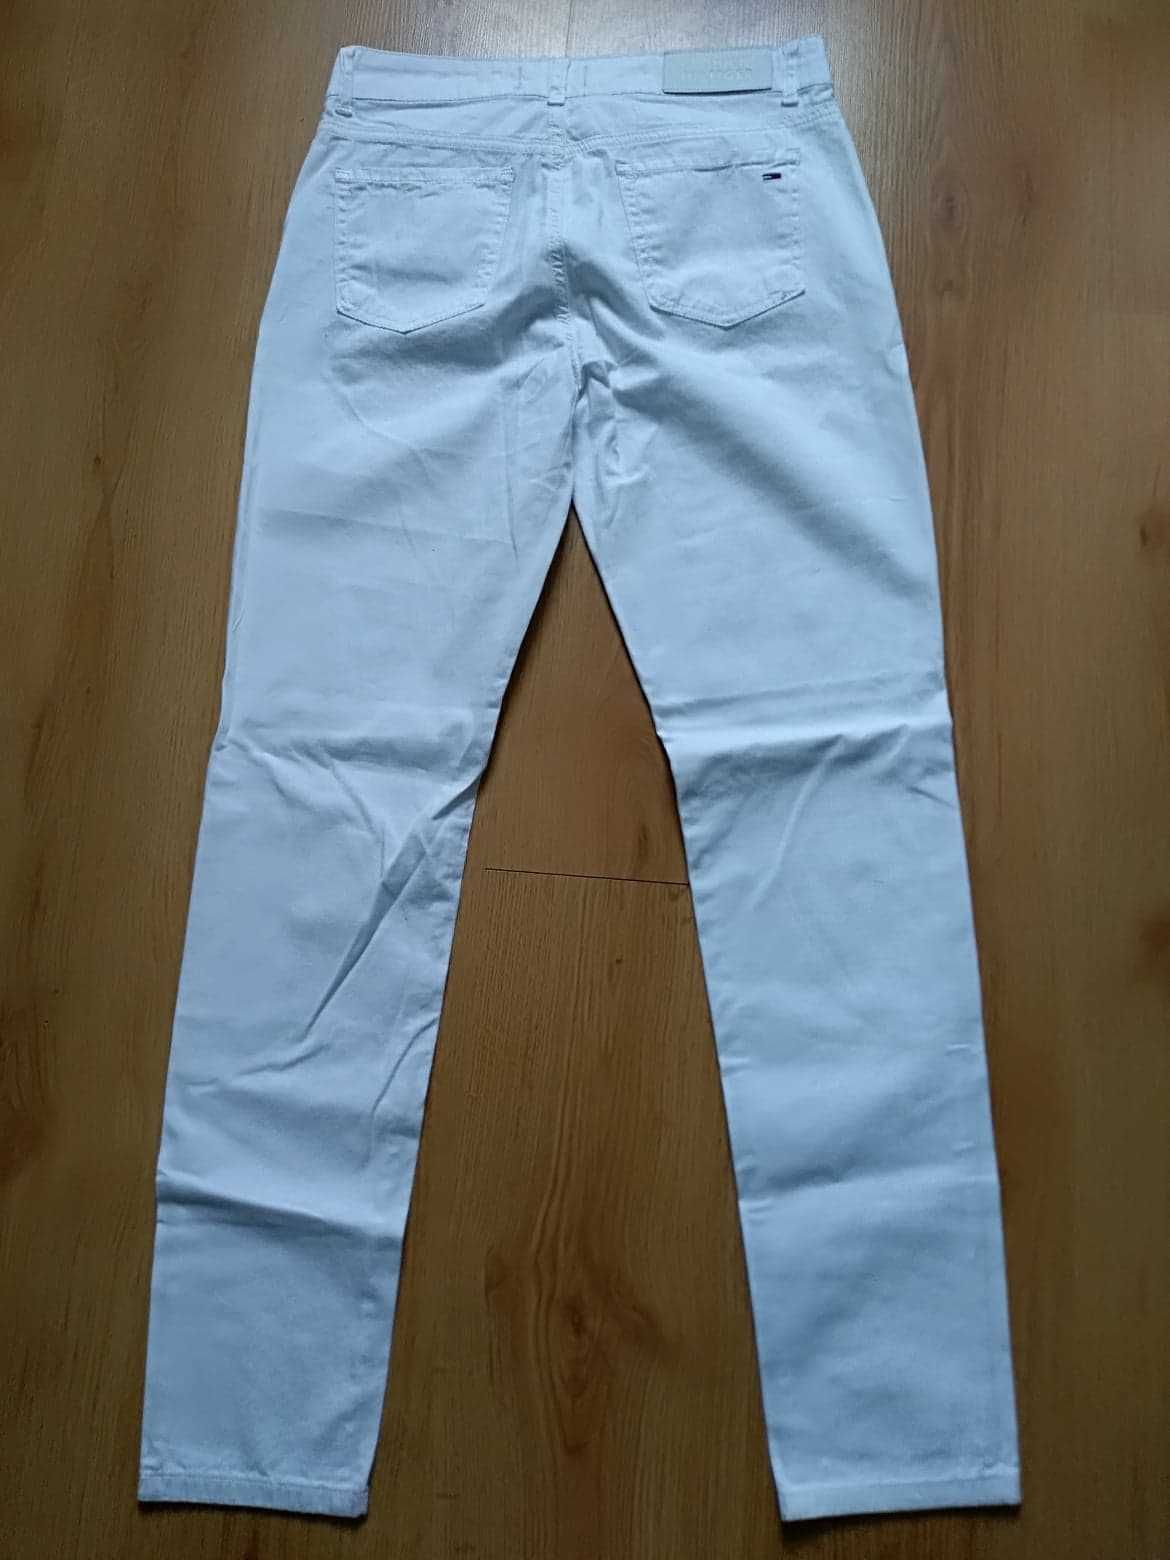 LATO spodnie materiałowe TOMMY HILFIGER  rozm. 31 pas 78cm